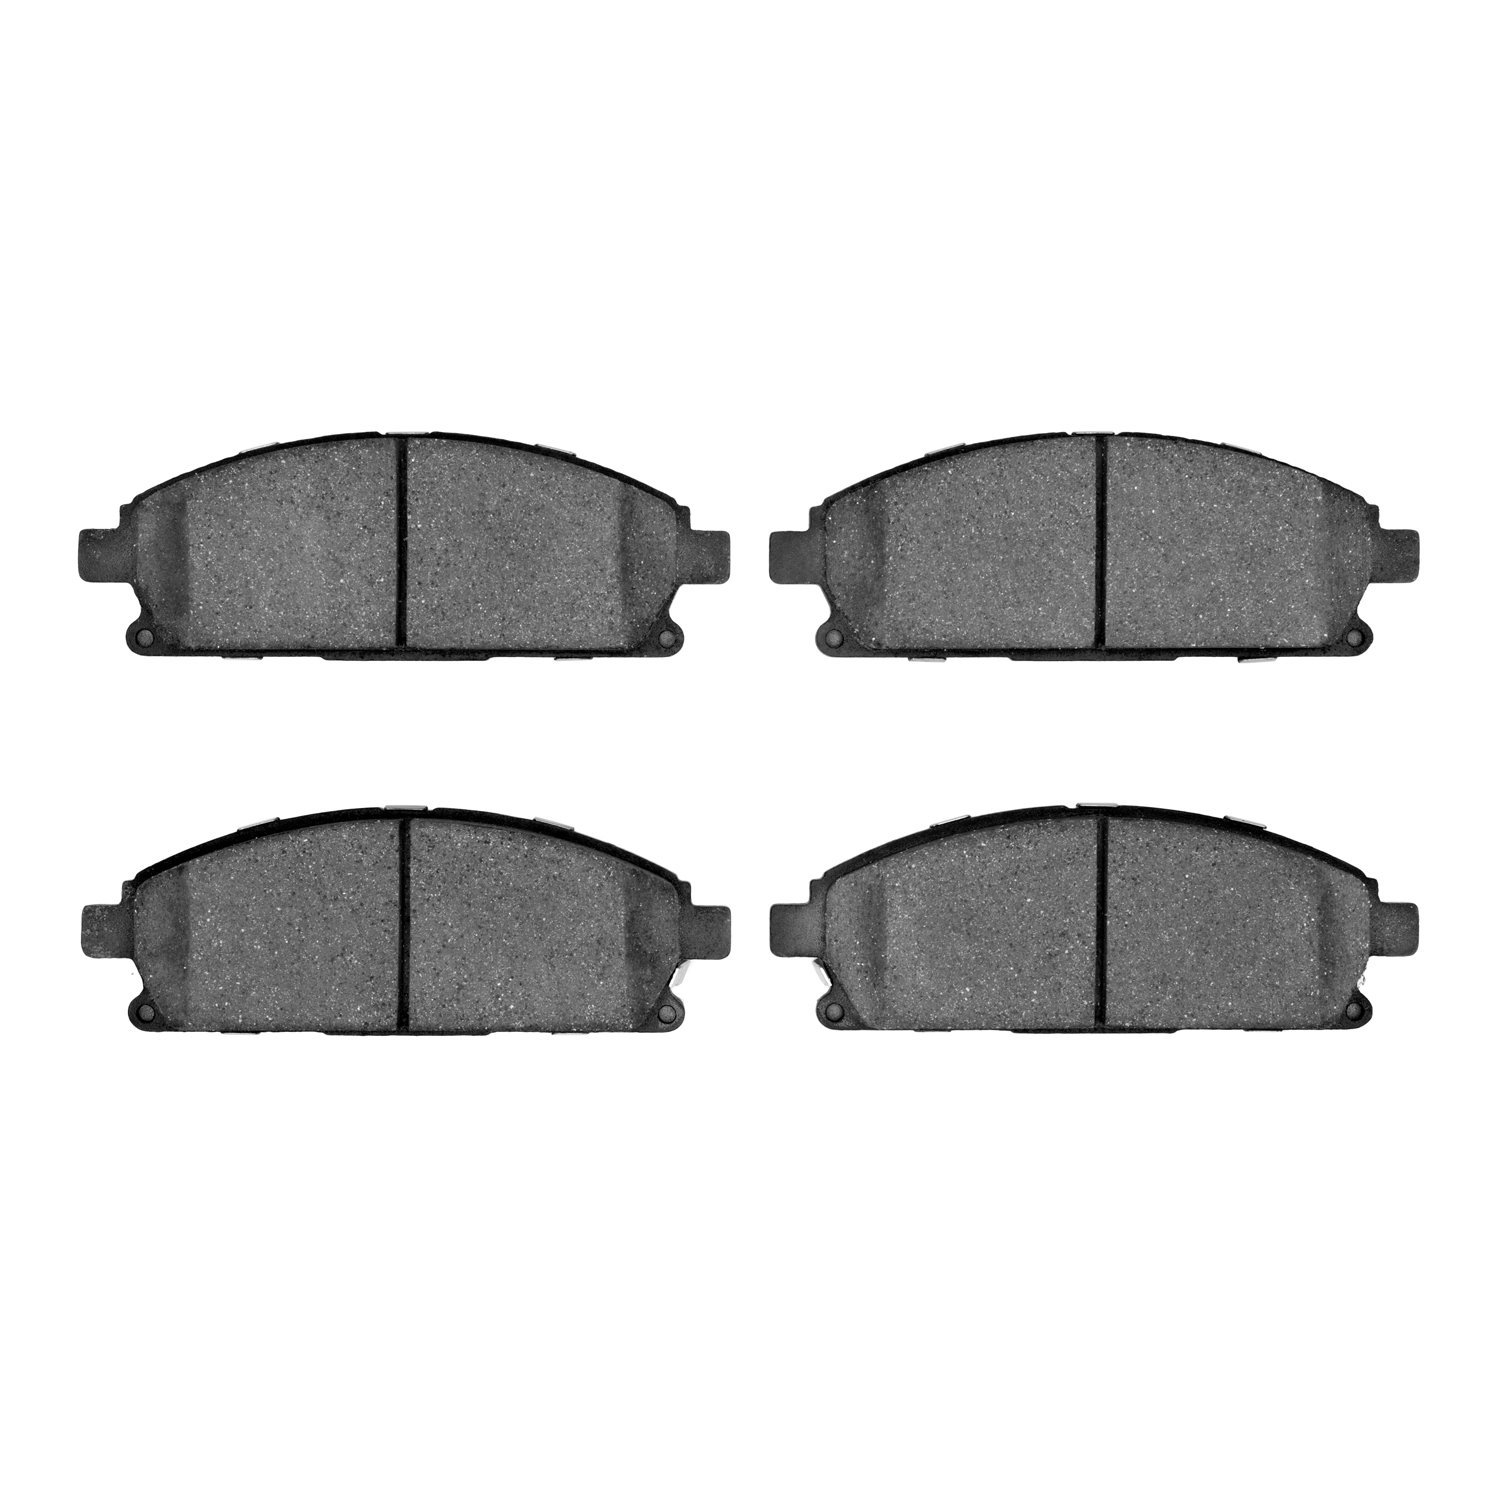 1310-0691-00 3000-Series Ceramic Brake Pads, 1996-2017 Multiple Makes/Models, Position: Front